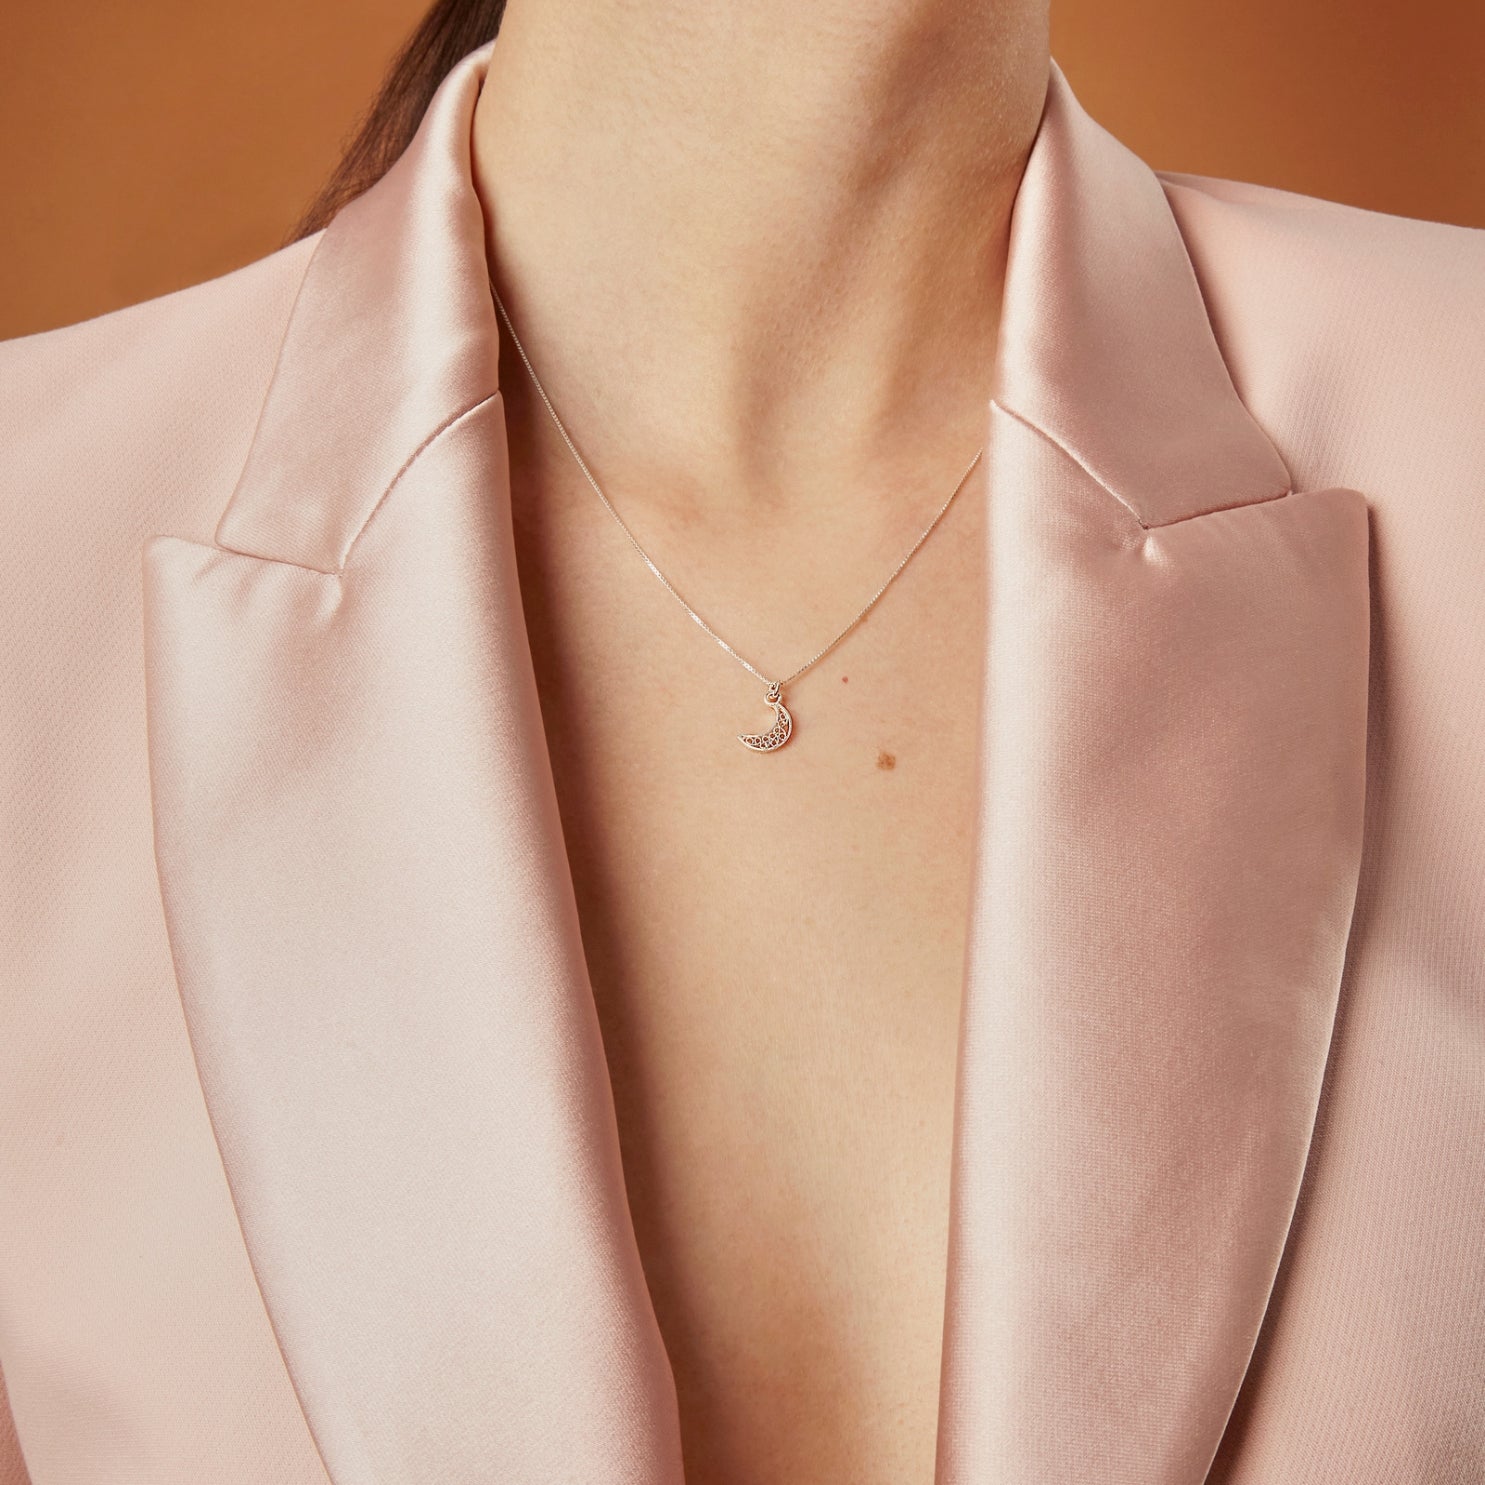 Luna 18k Gold Plated Filigree Pendant Necklace - 16" - Necklaces